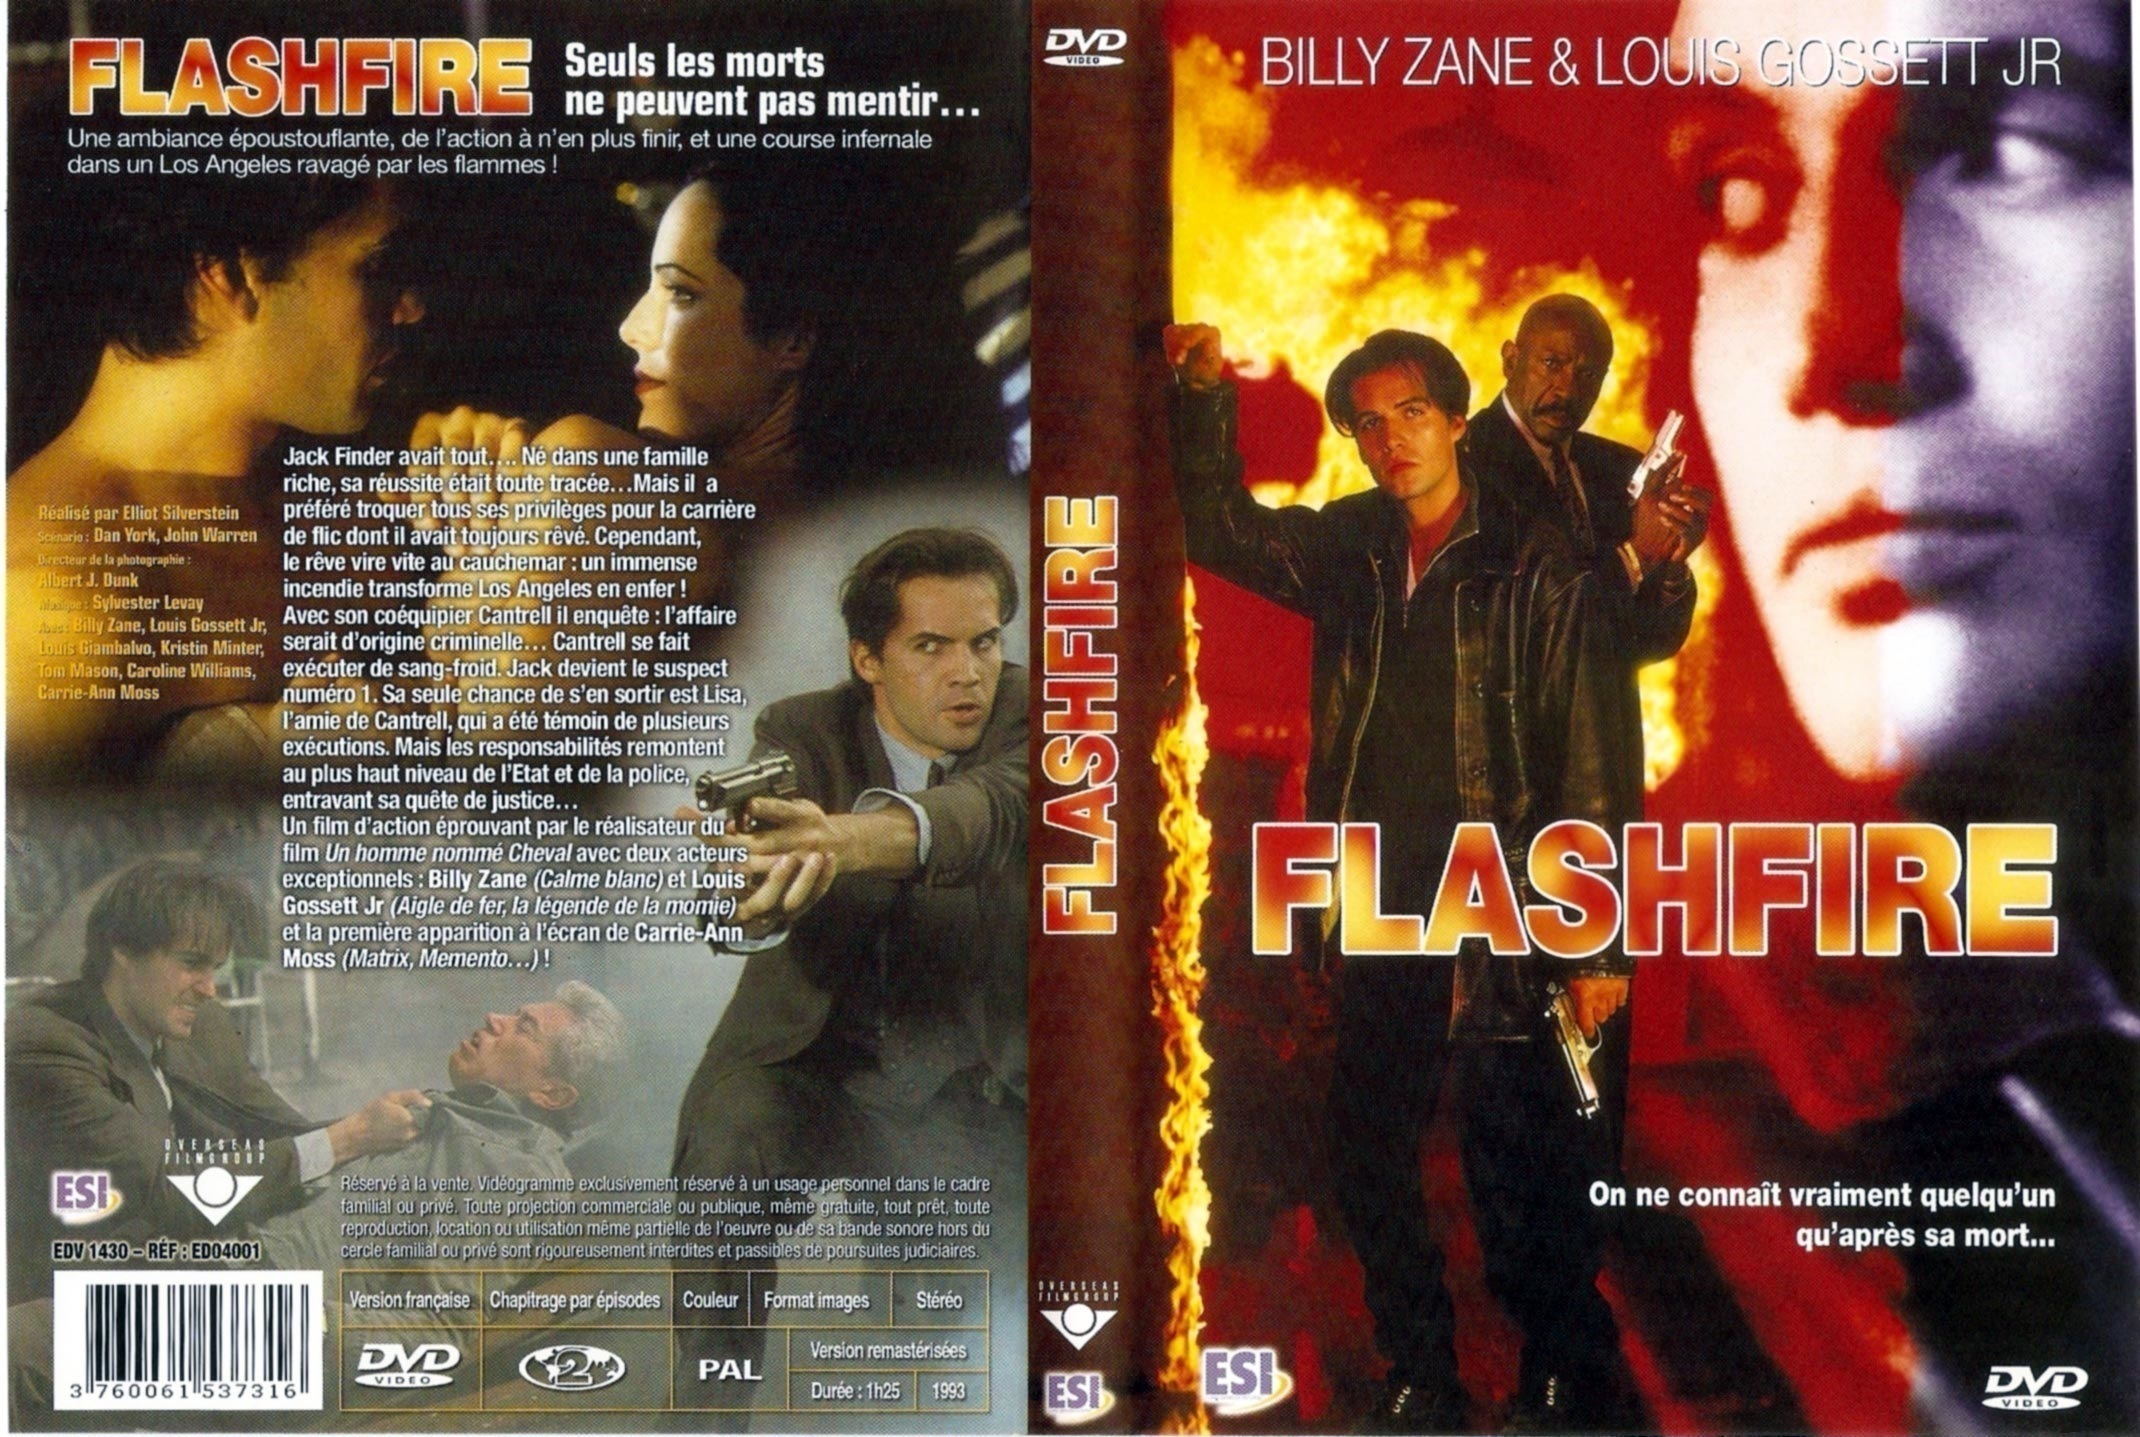 Jaquette DVD Flashfire